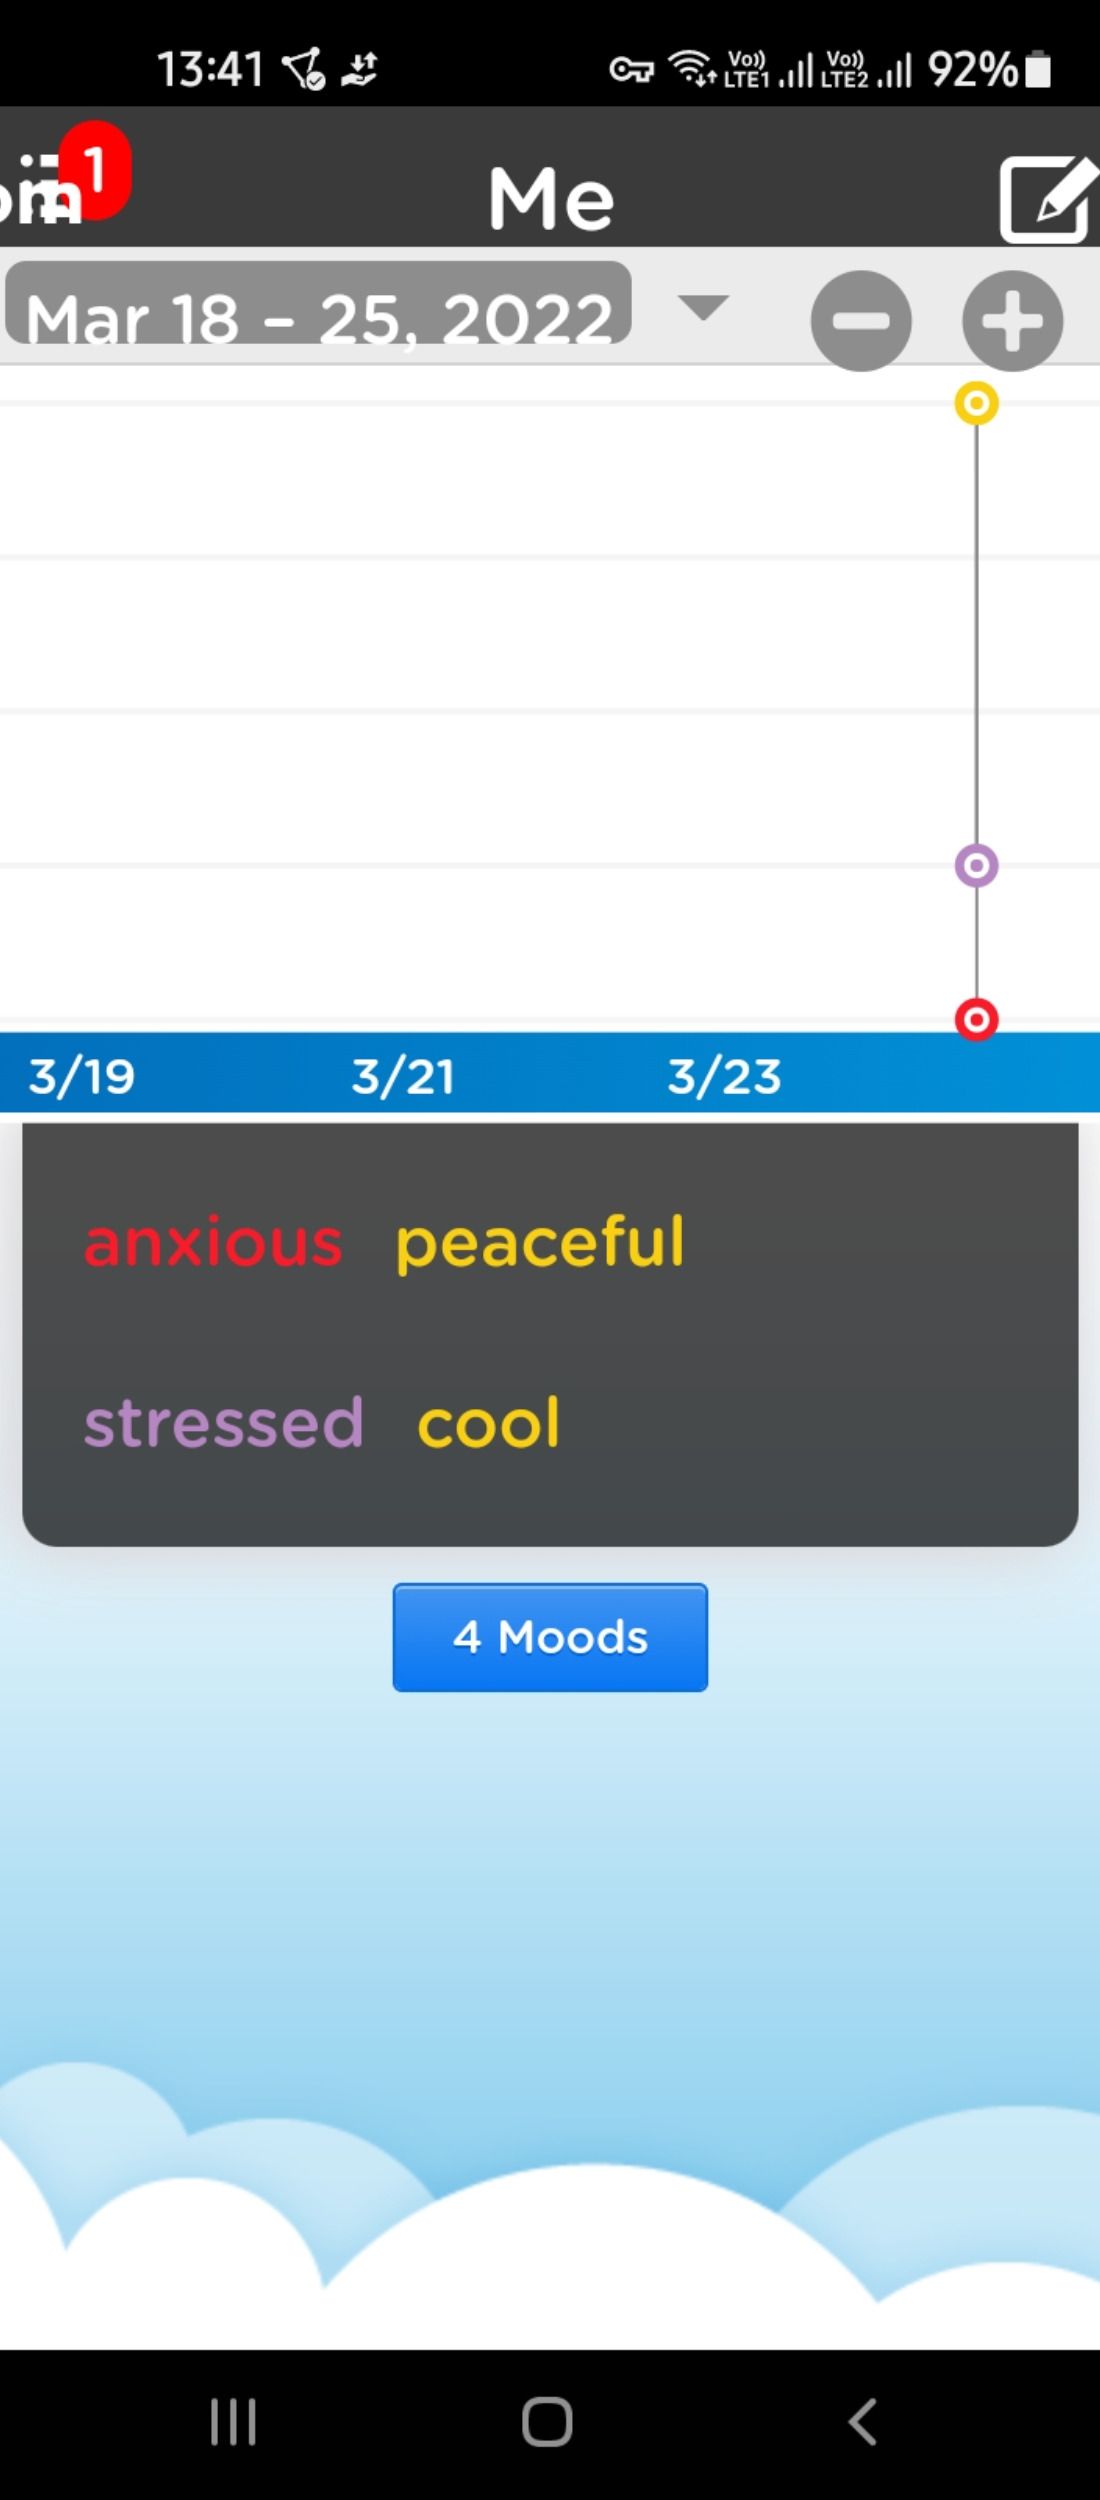 Interpreting mood graphs in the Moodtrack app